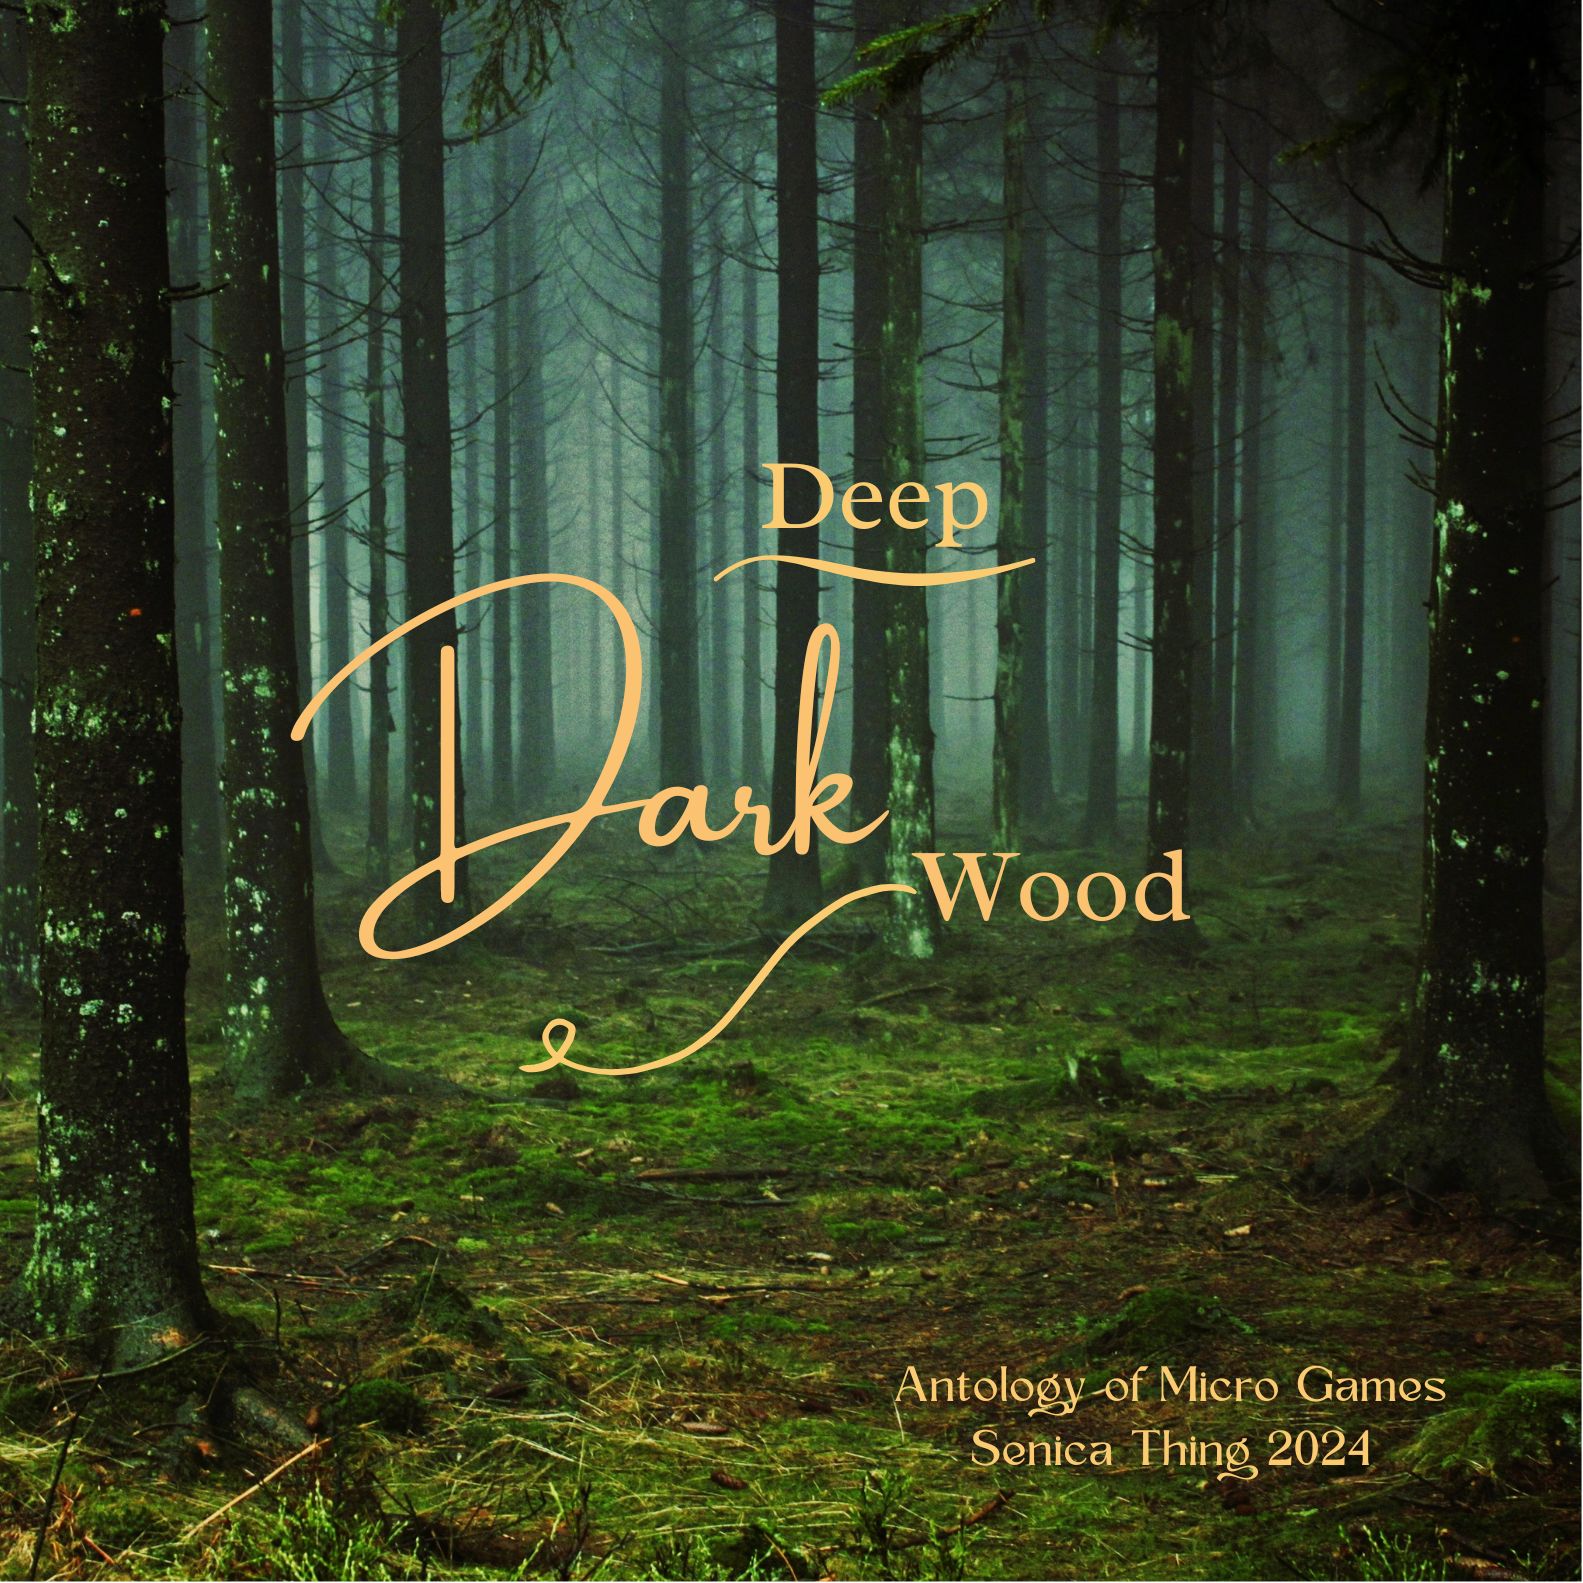 Deep Dark Wood by Senica Thing